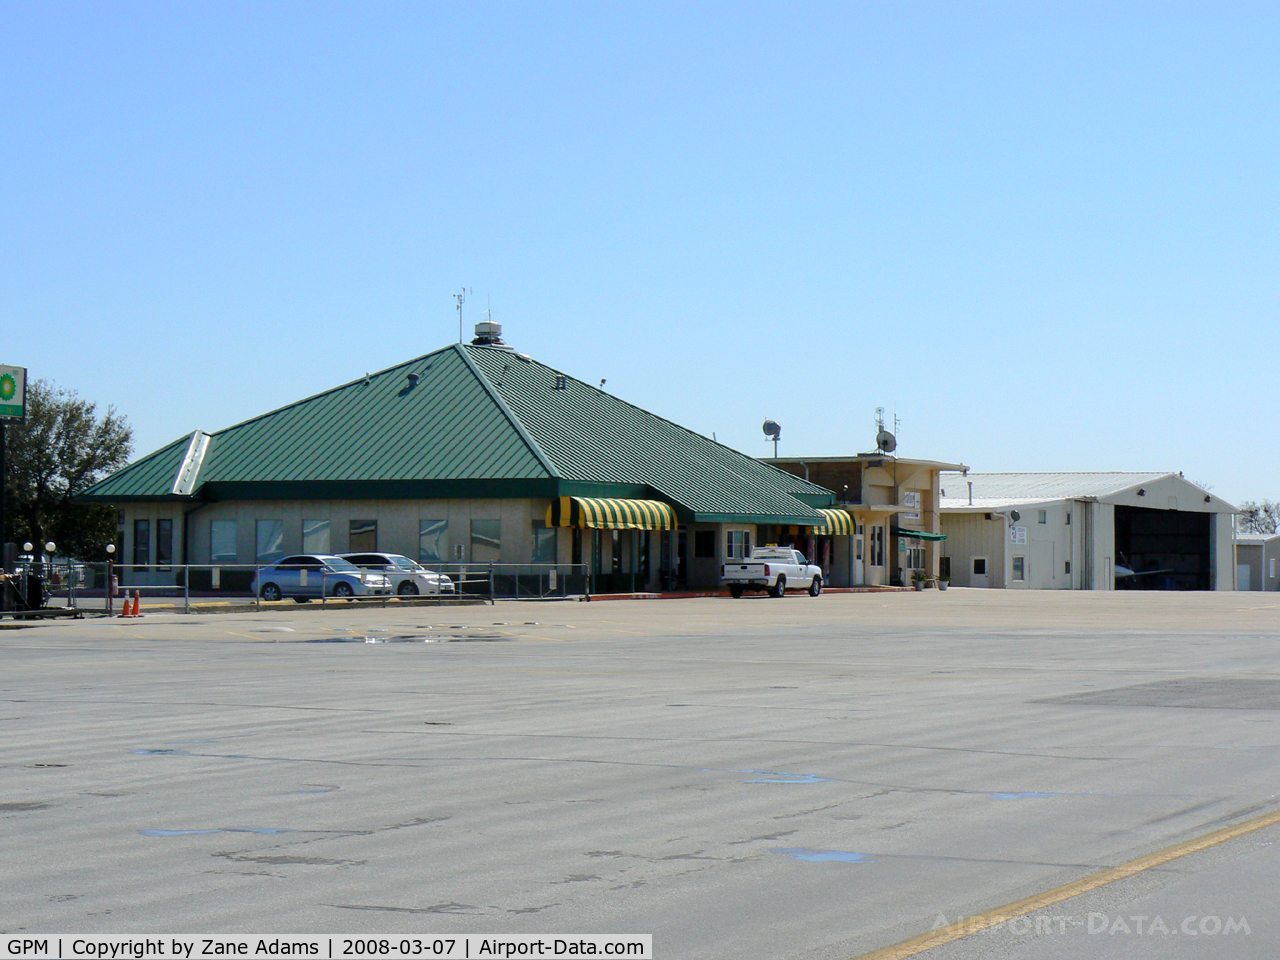 Grand Prairie Municipal Airport (GPM) - Main Terminal Building and Maintenance Hanger